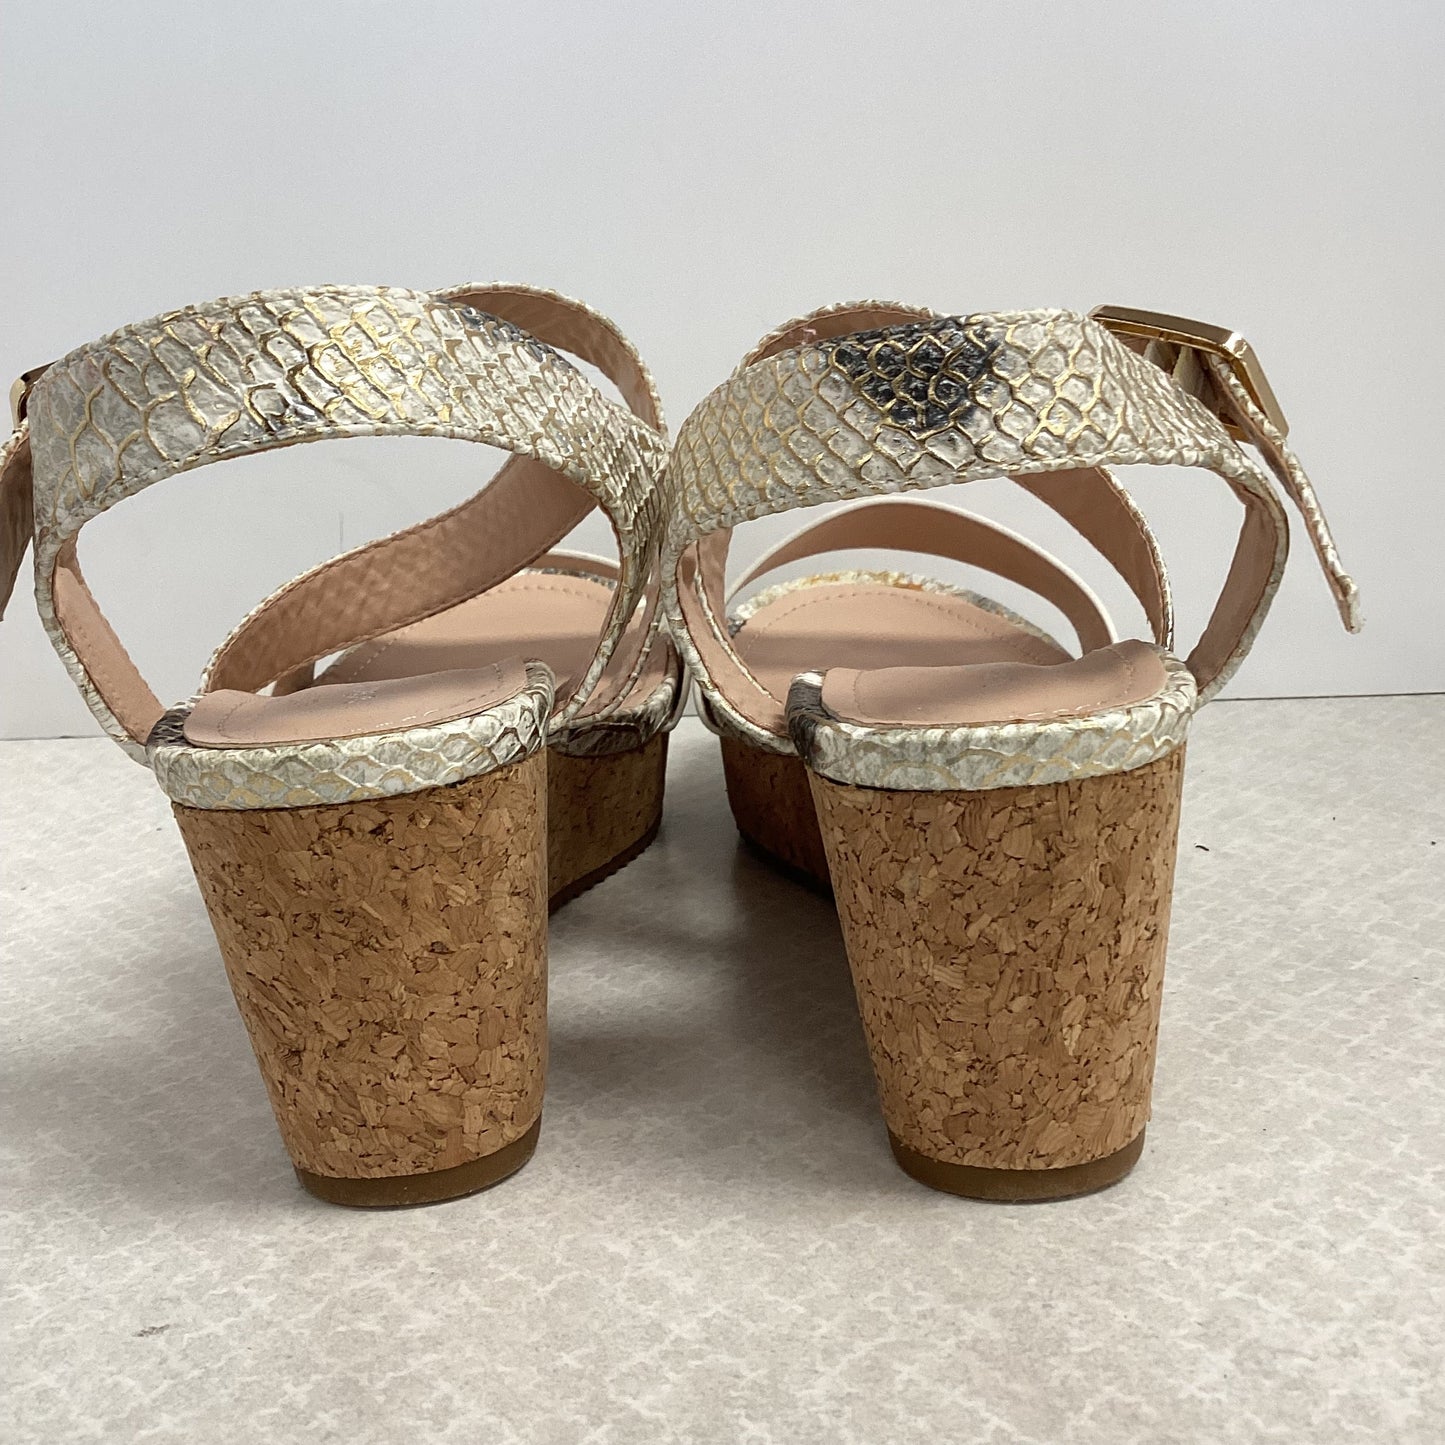 White Sandals Heels Wedge Via Pinky, Size 7.5